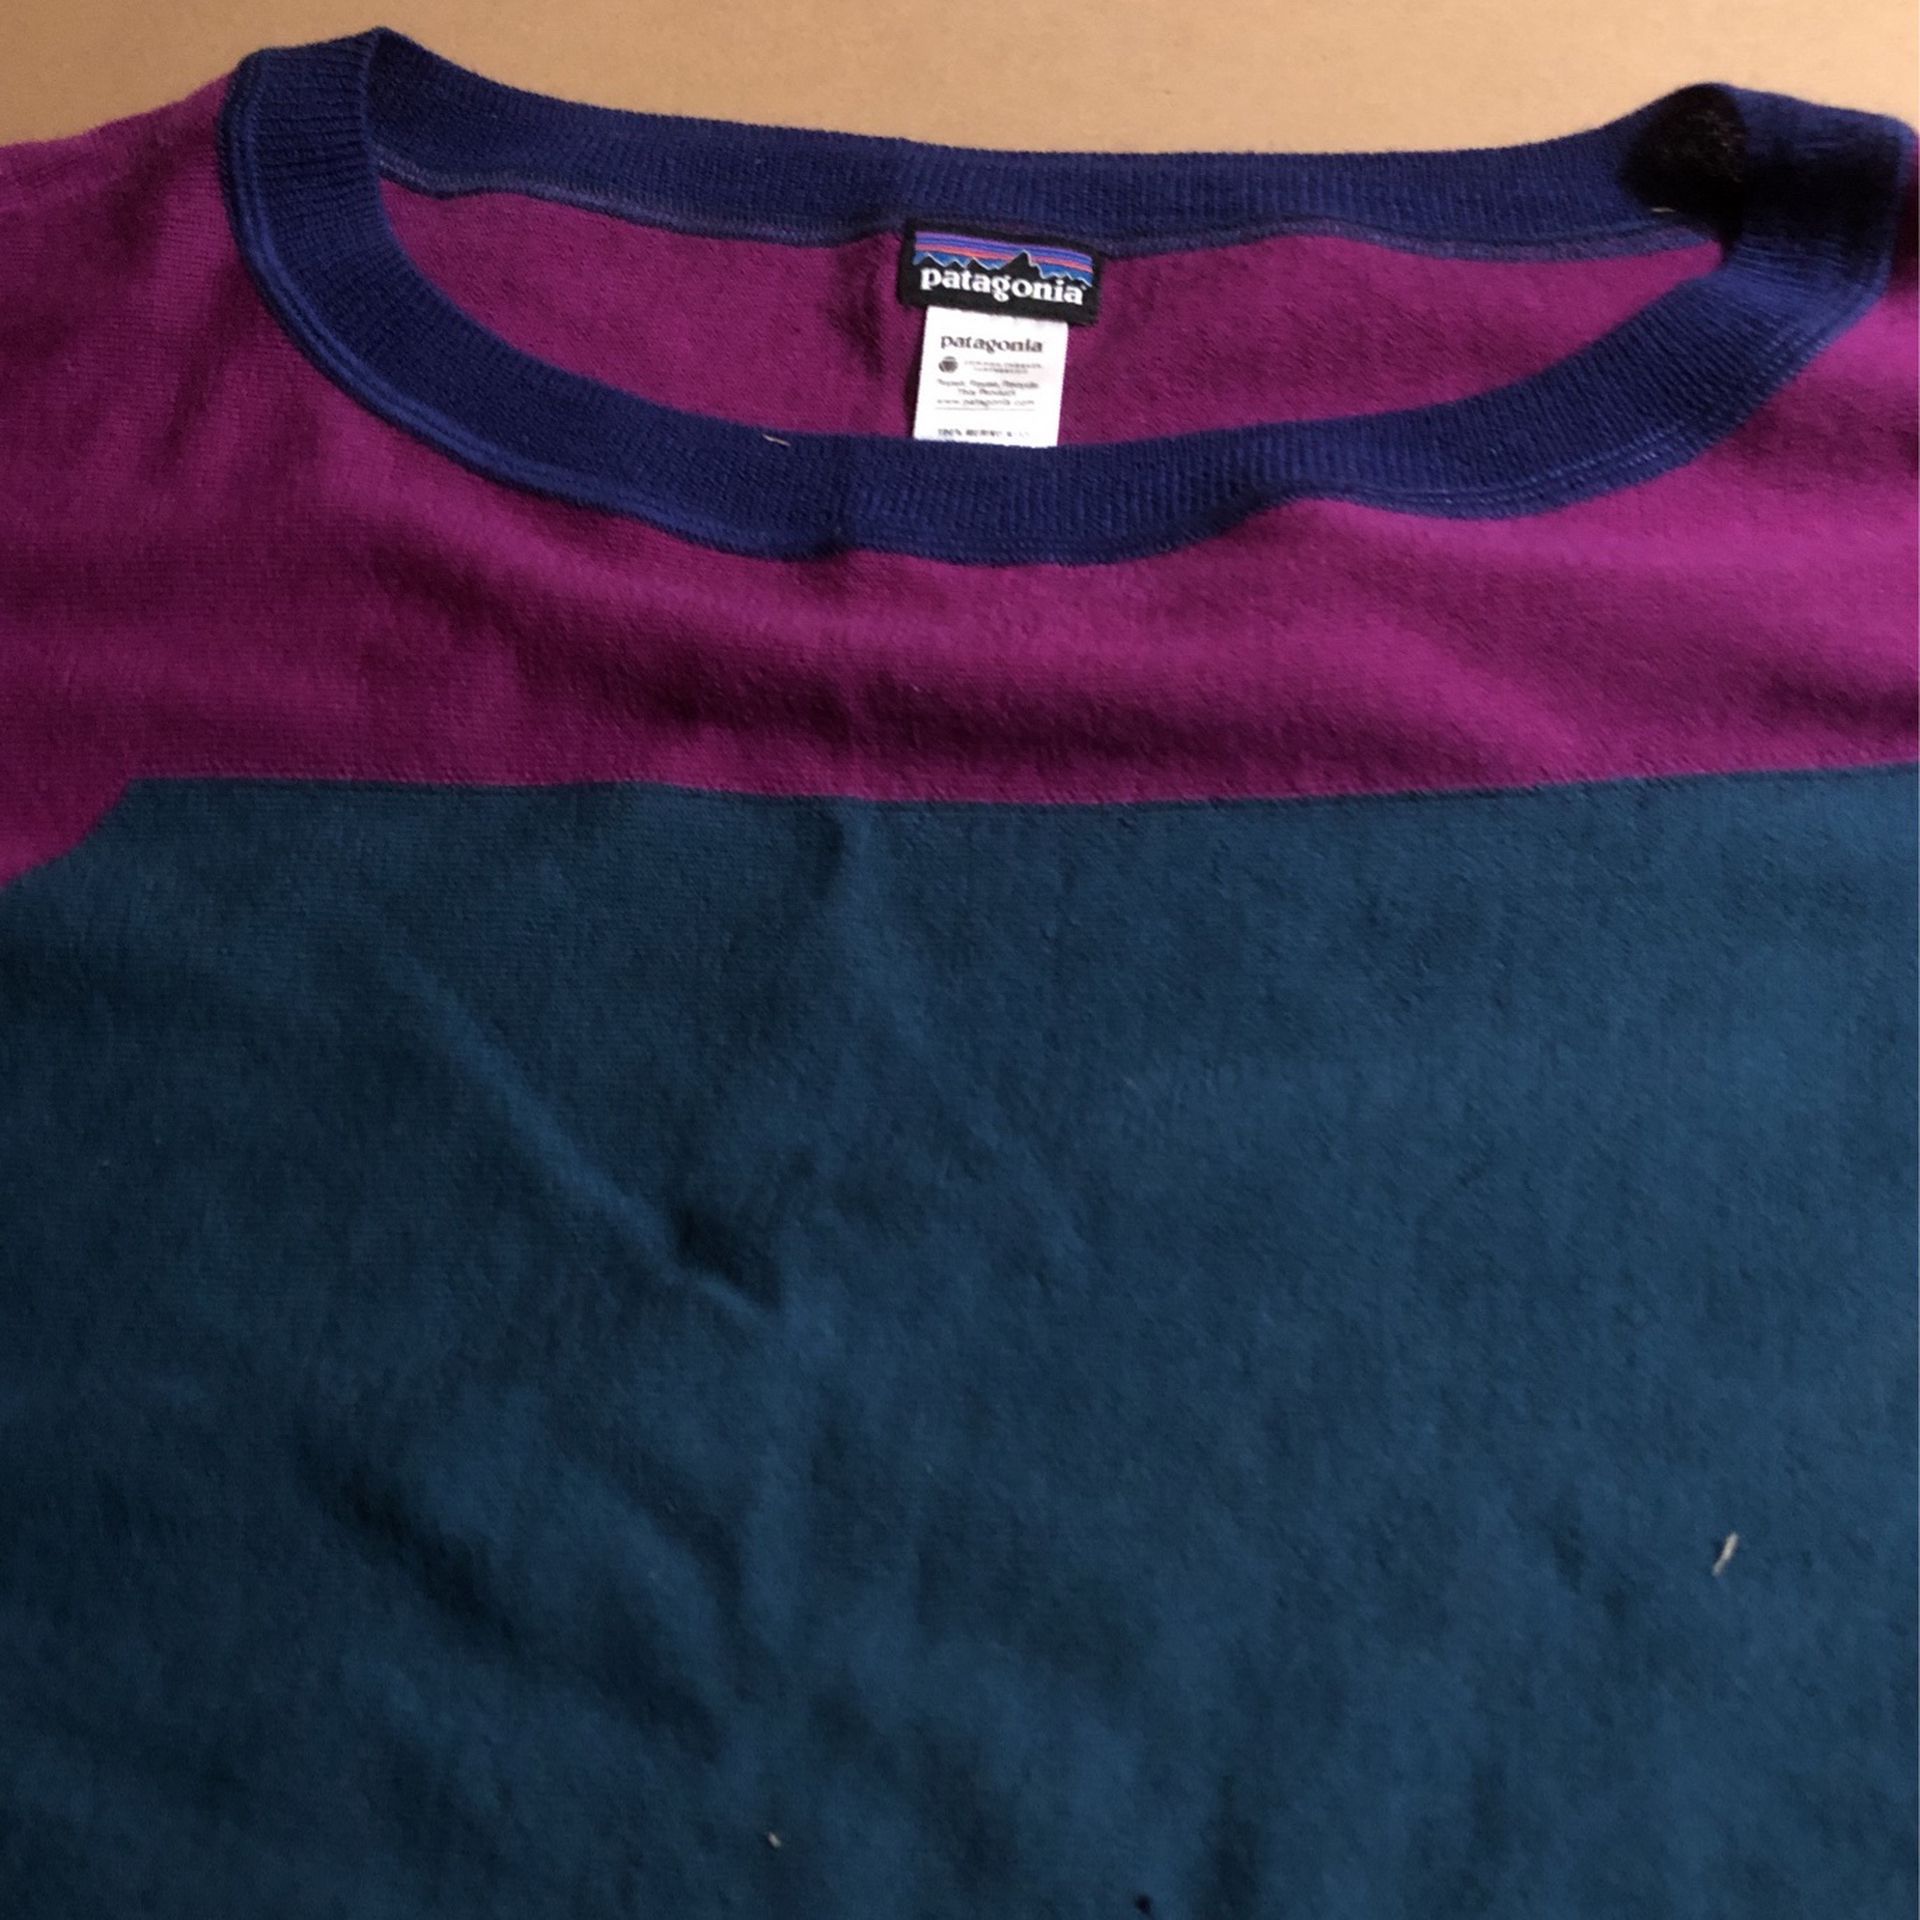 Long Sleeve Patagonia Shirt Xl